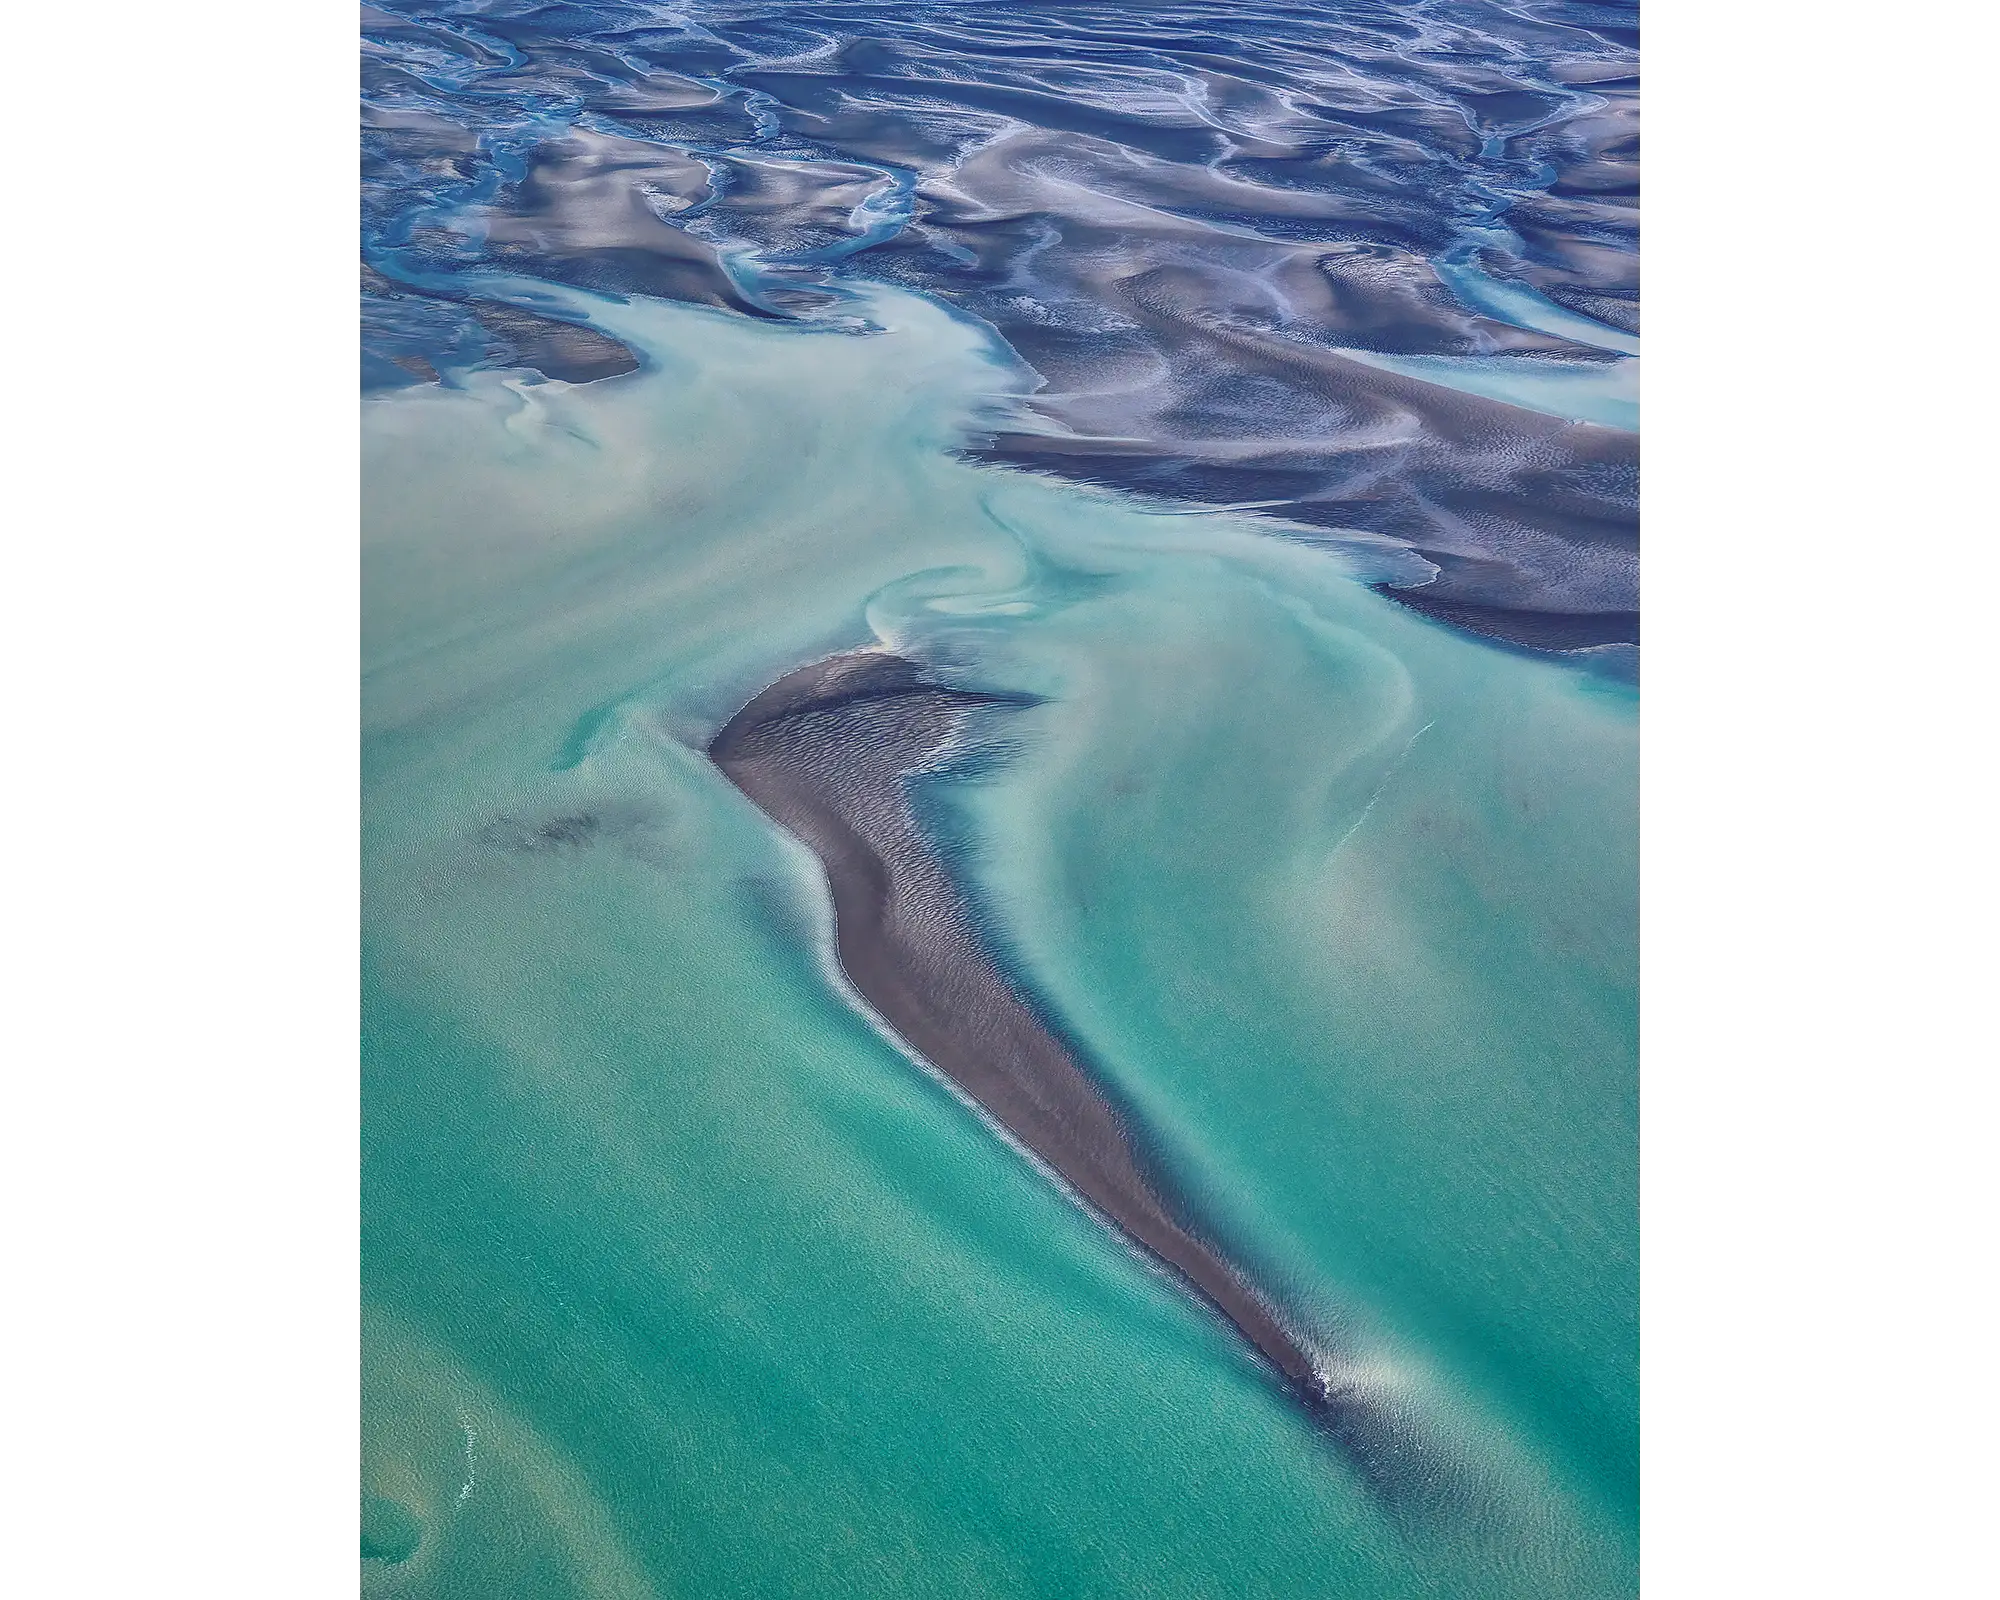 Influx - King tide, Roebuck Bay, The Kimberley, Western Australia.